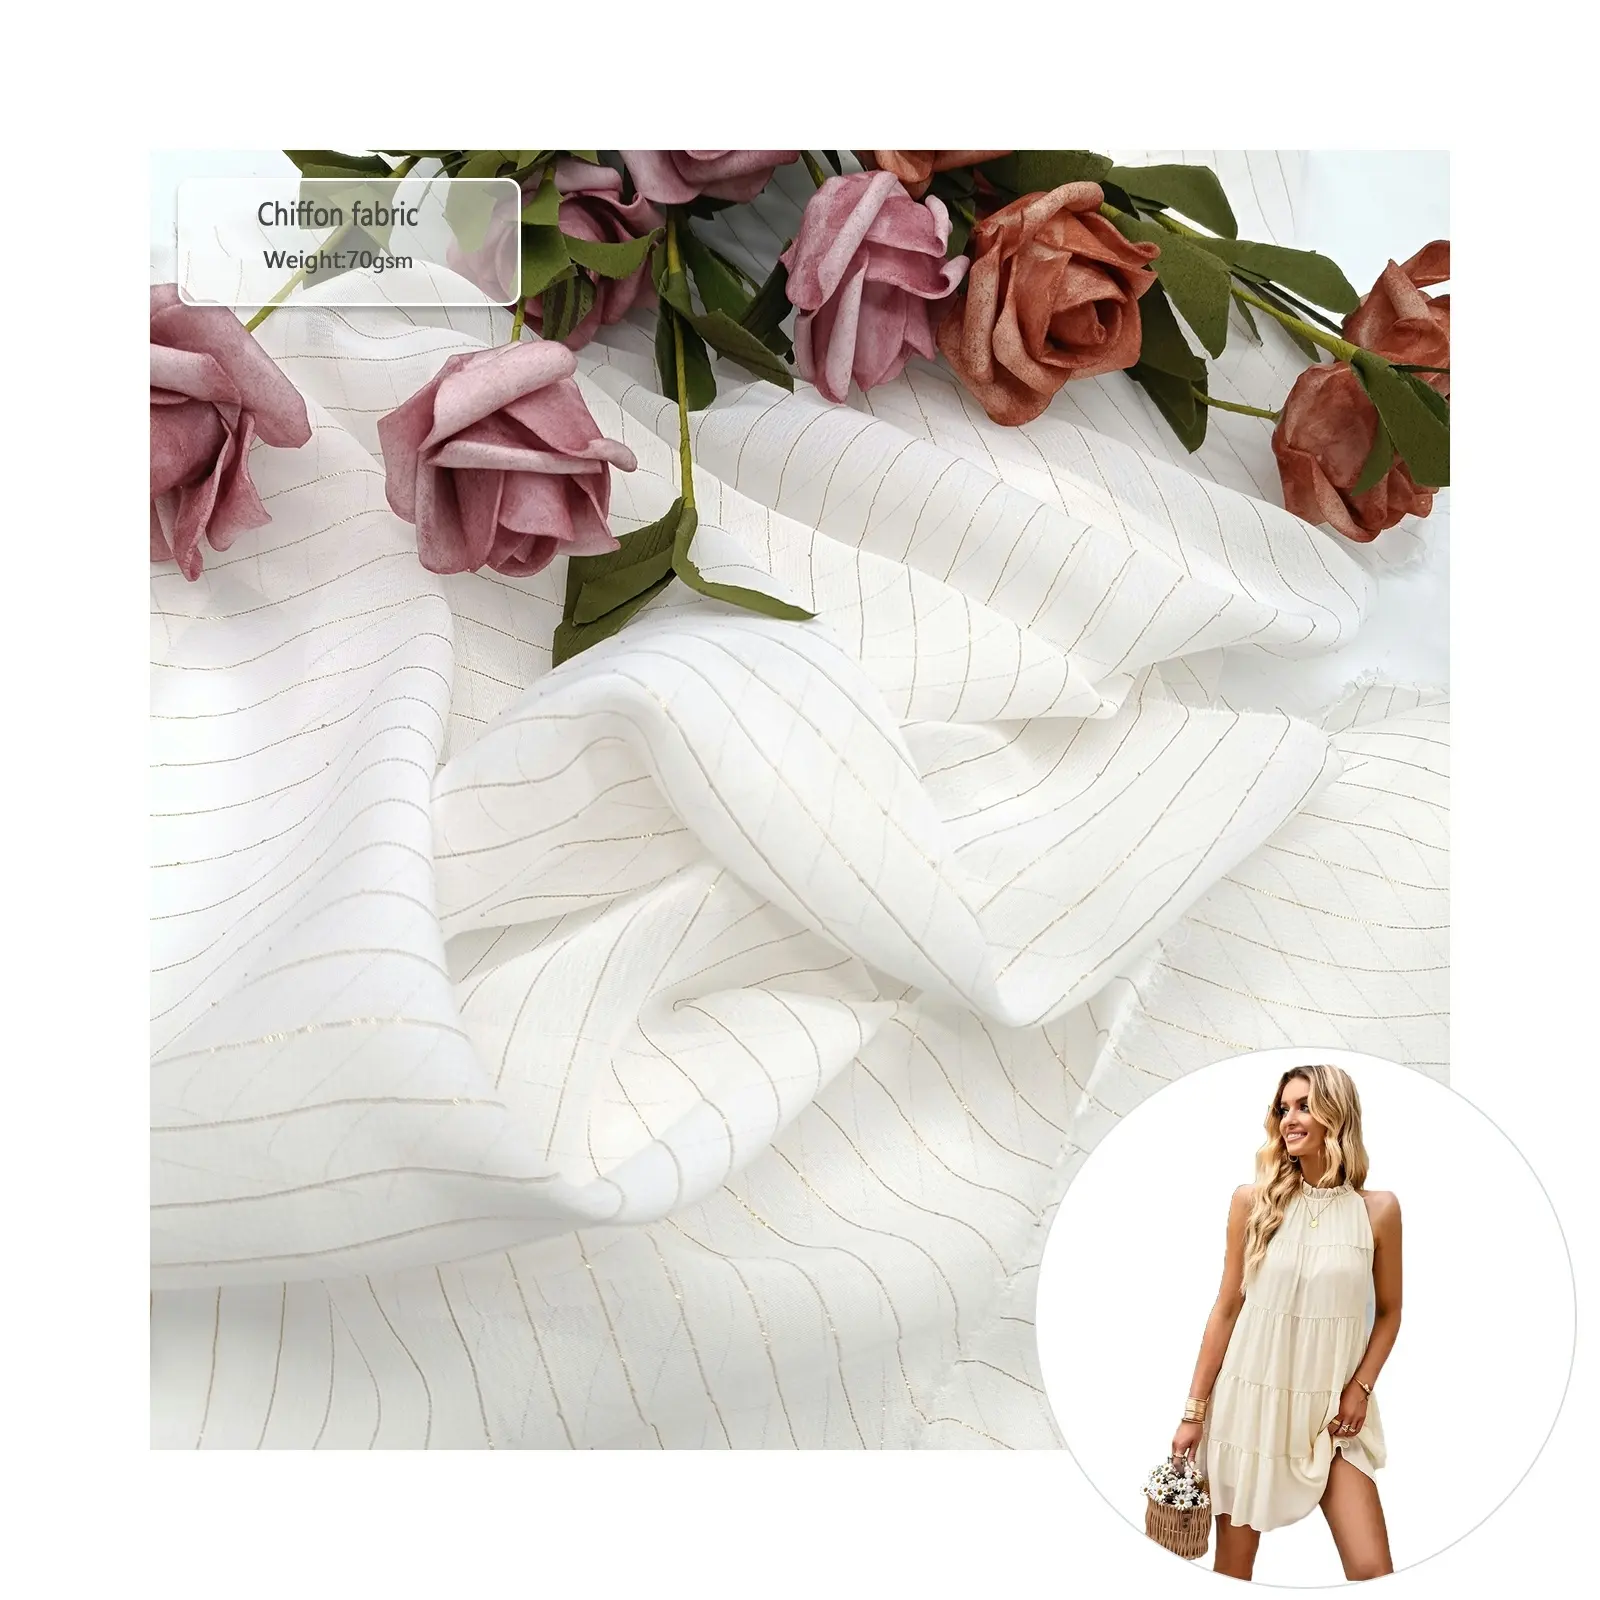 Luxury fabric White Color Spun Gold Yarn Lurex Georgette 75D Chiffon Fabric Organza for Girls' Chic dress